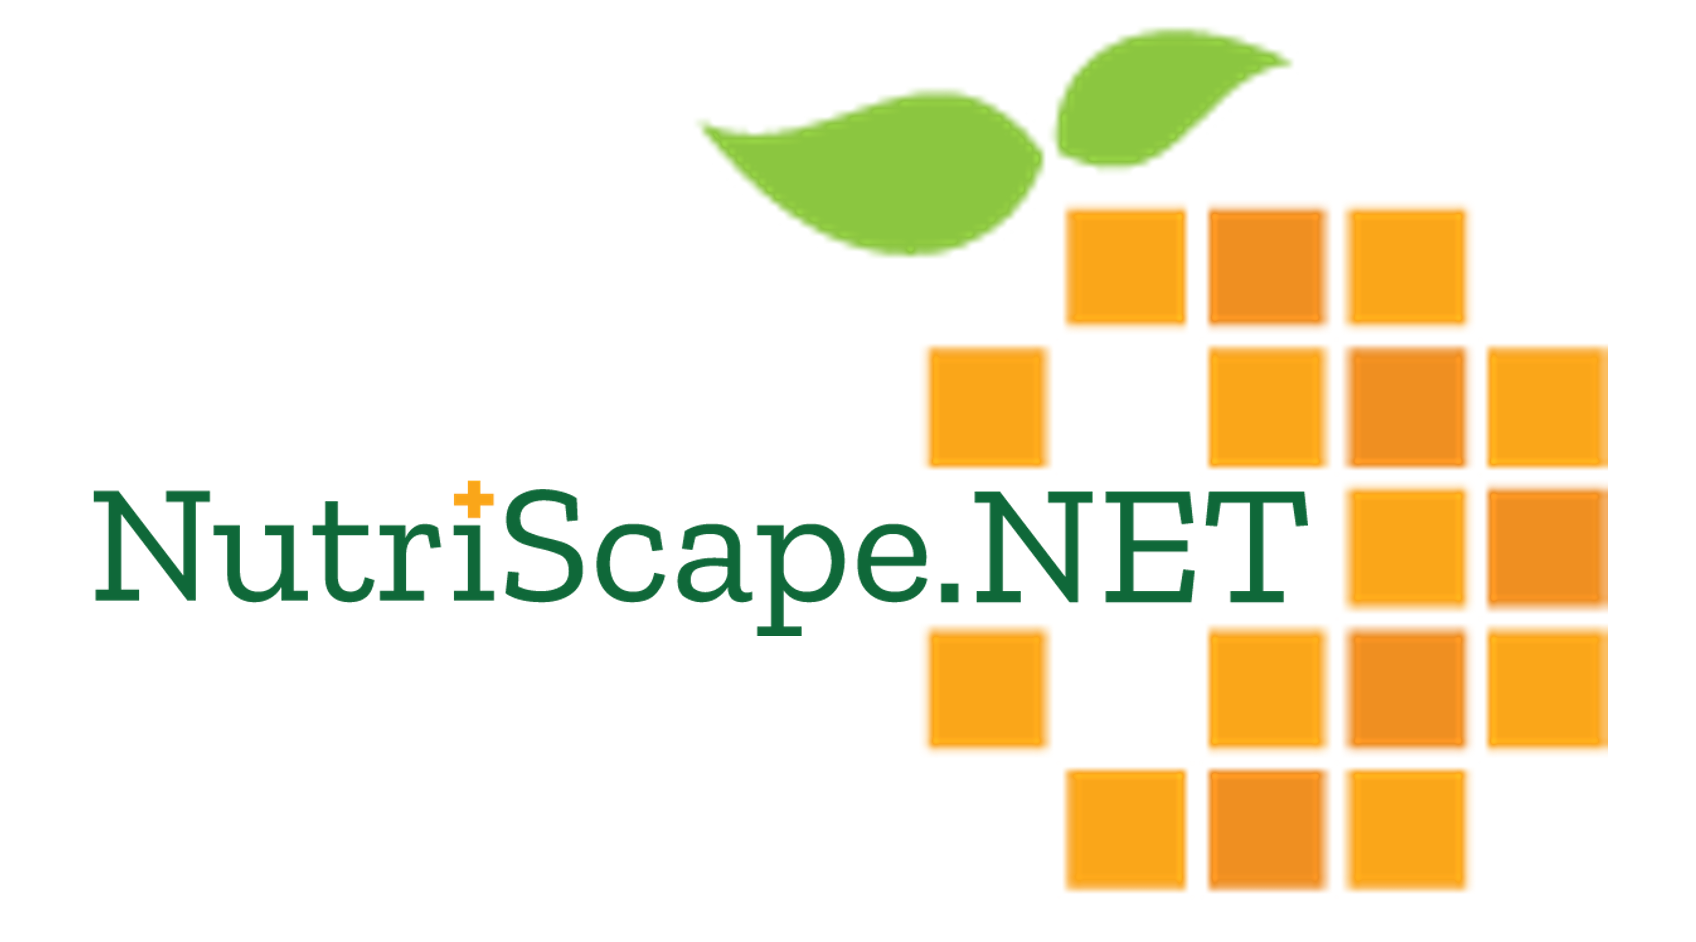 NutriScape.NET